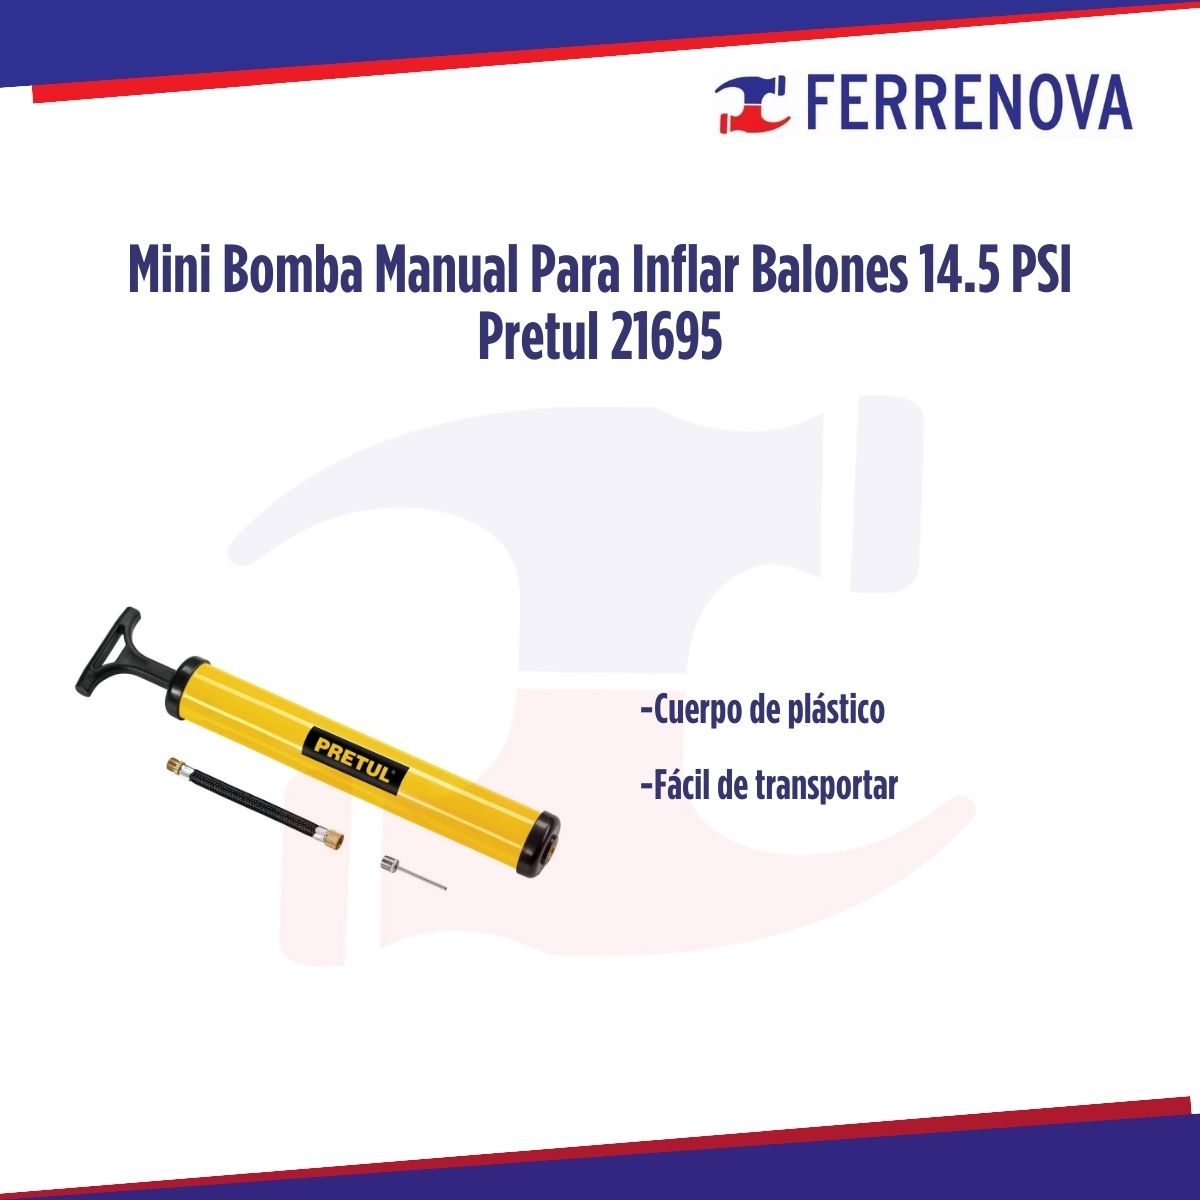 Mini Bomba Manual Para Inflar Balones 14.5 PSI Pretul 21695